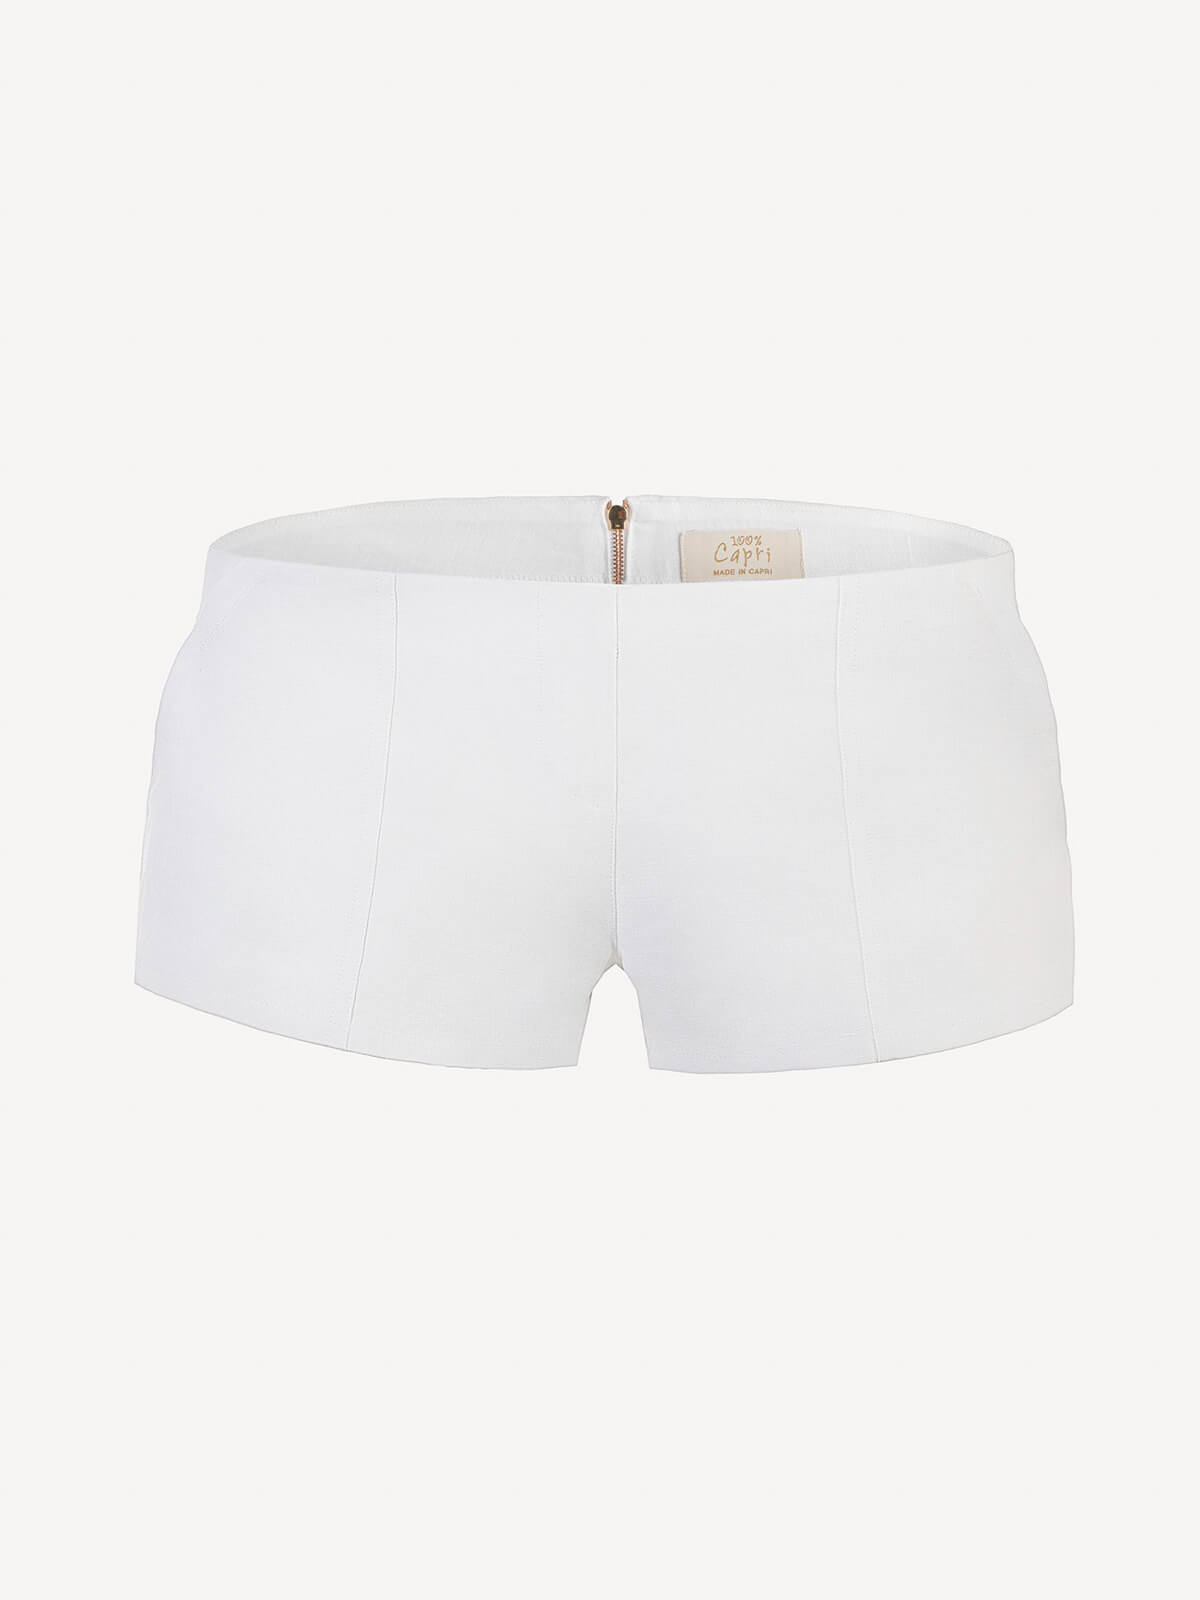 White Shorts Made of 100% Linen. Summer Linen Pants. White Shorts